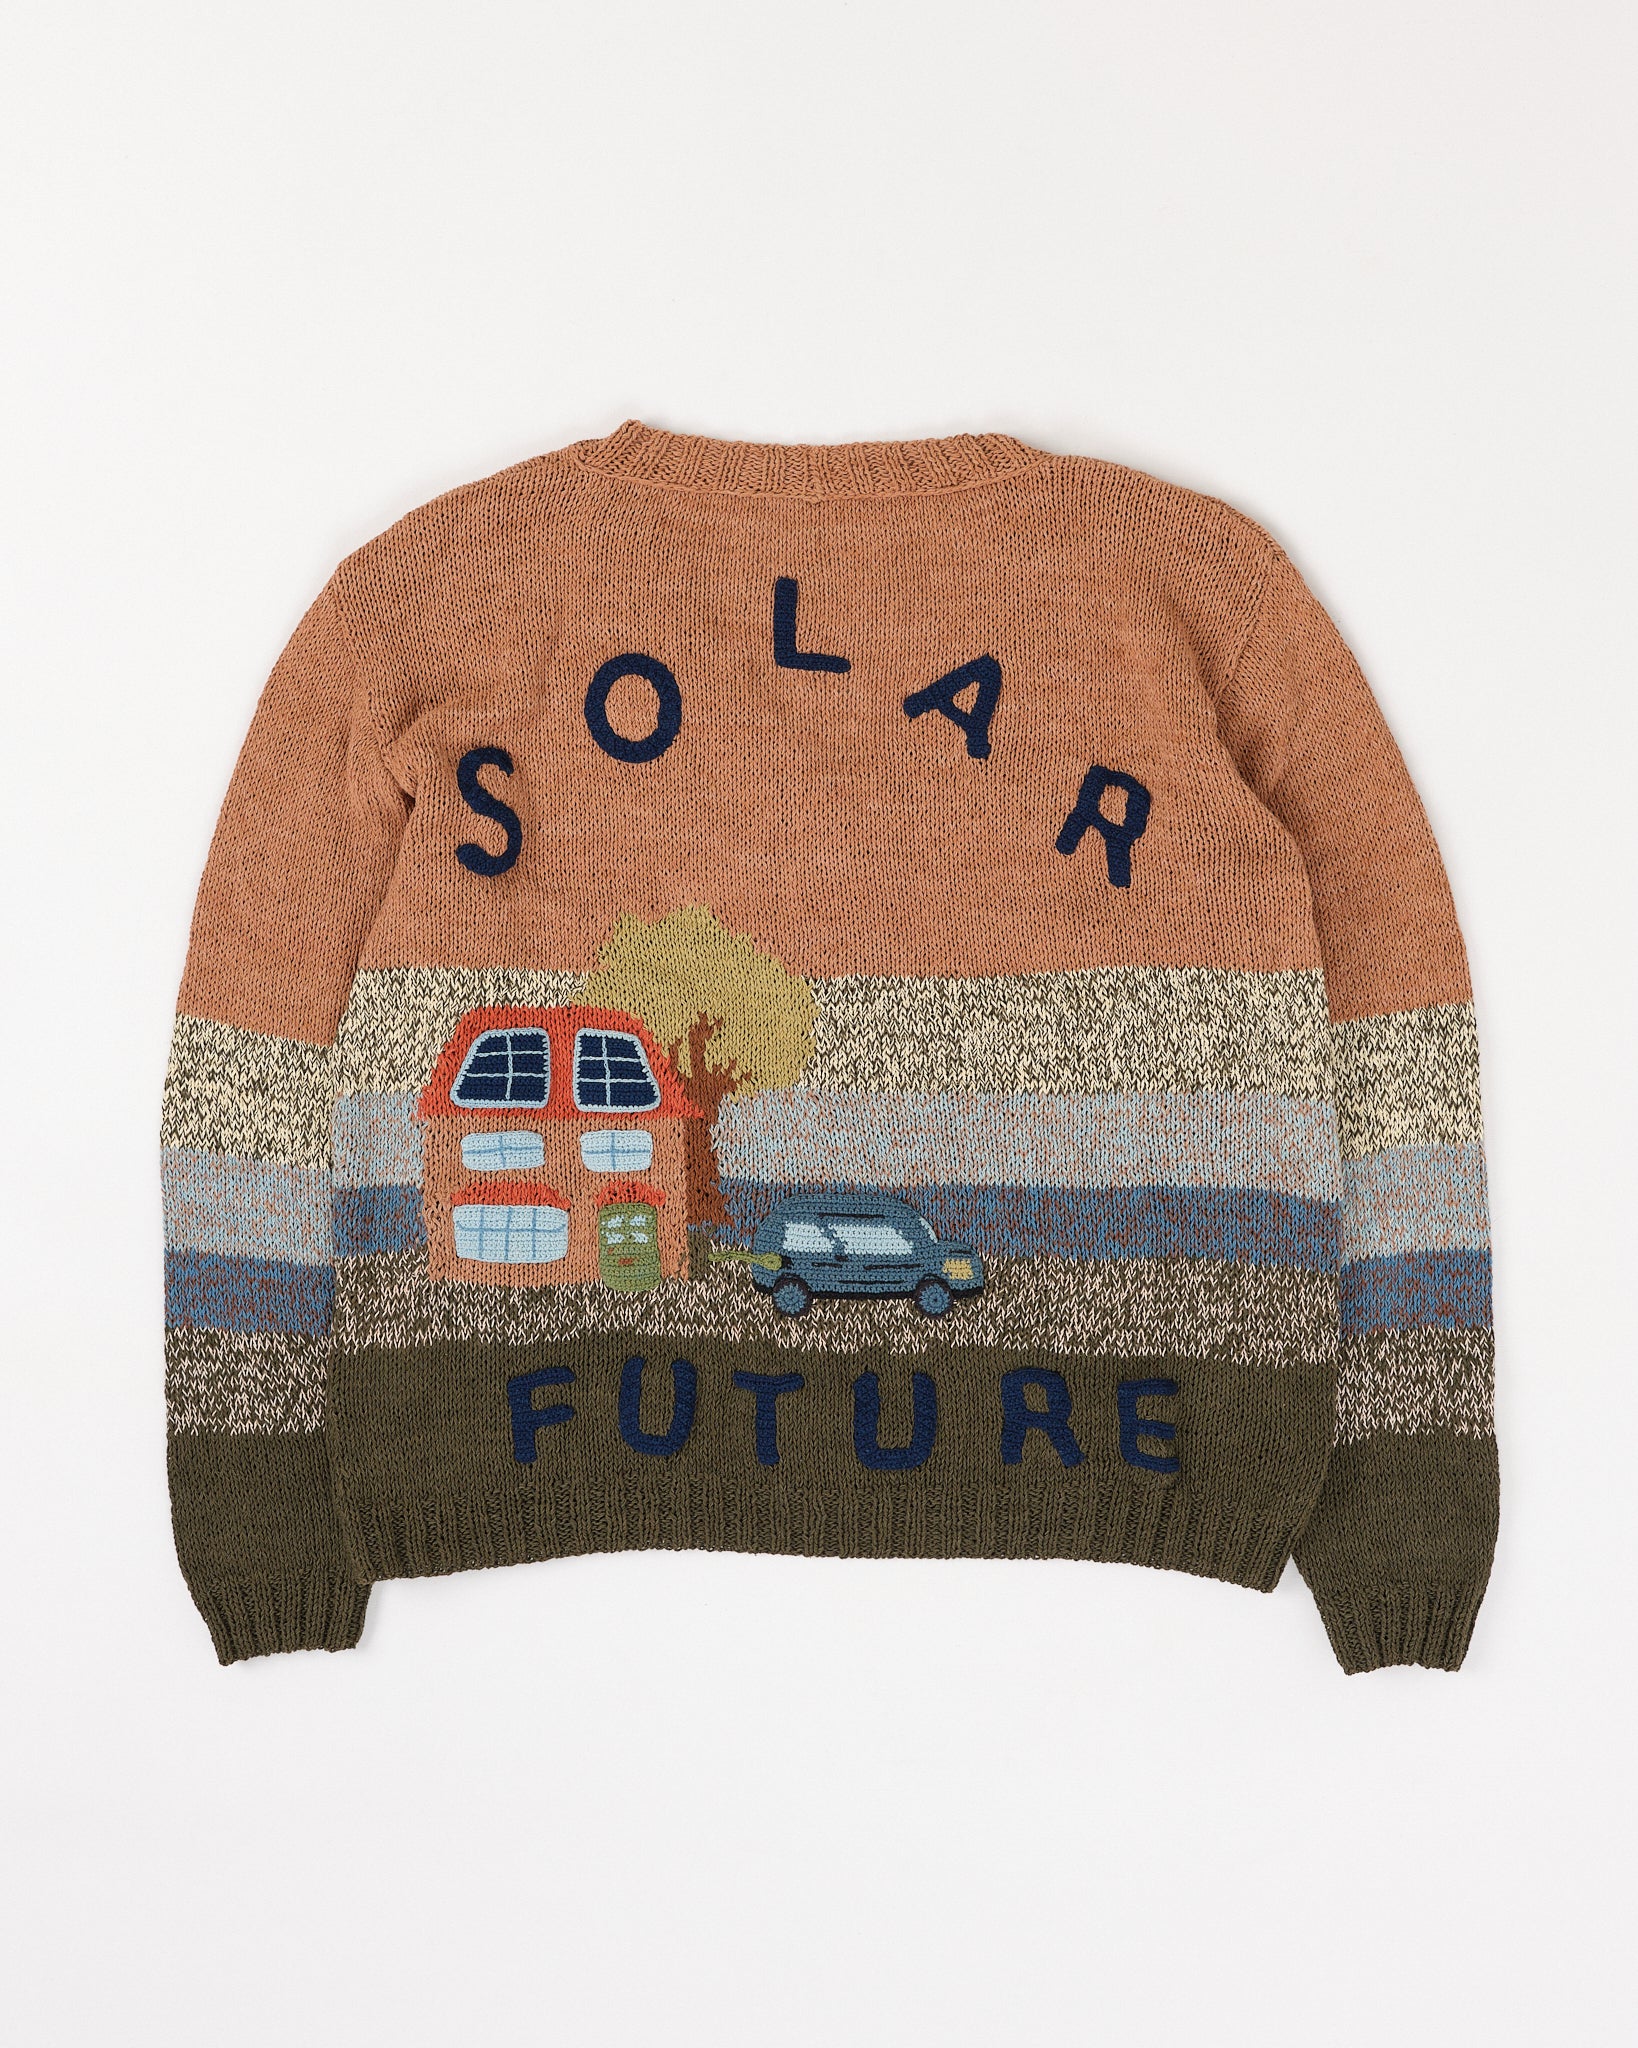 Twinsun Knit Cardigan - Clay Solar Future